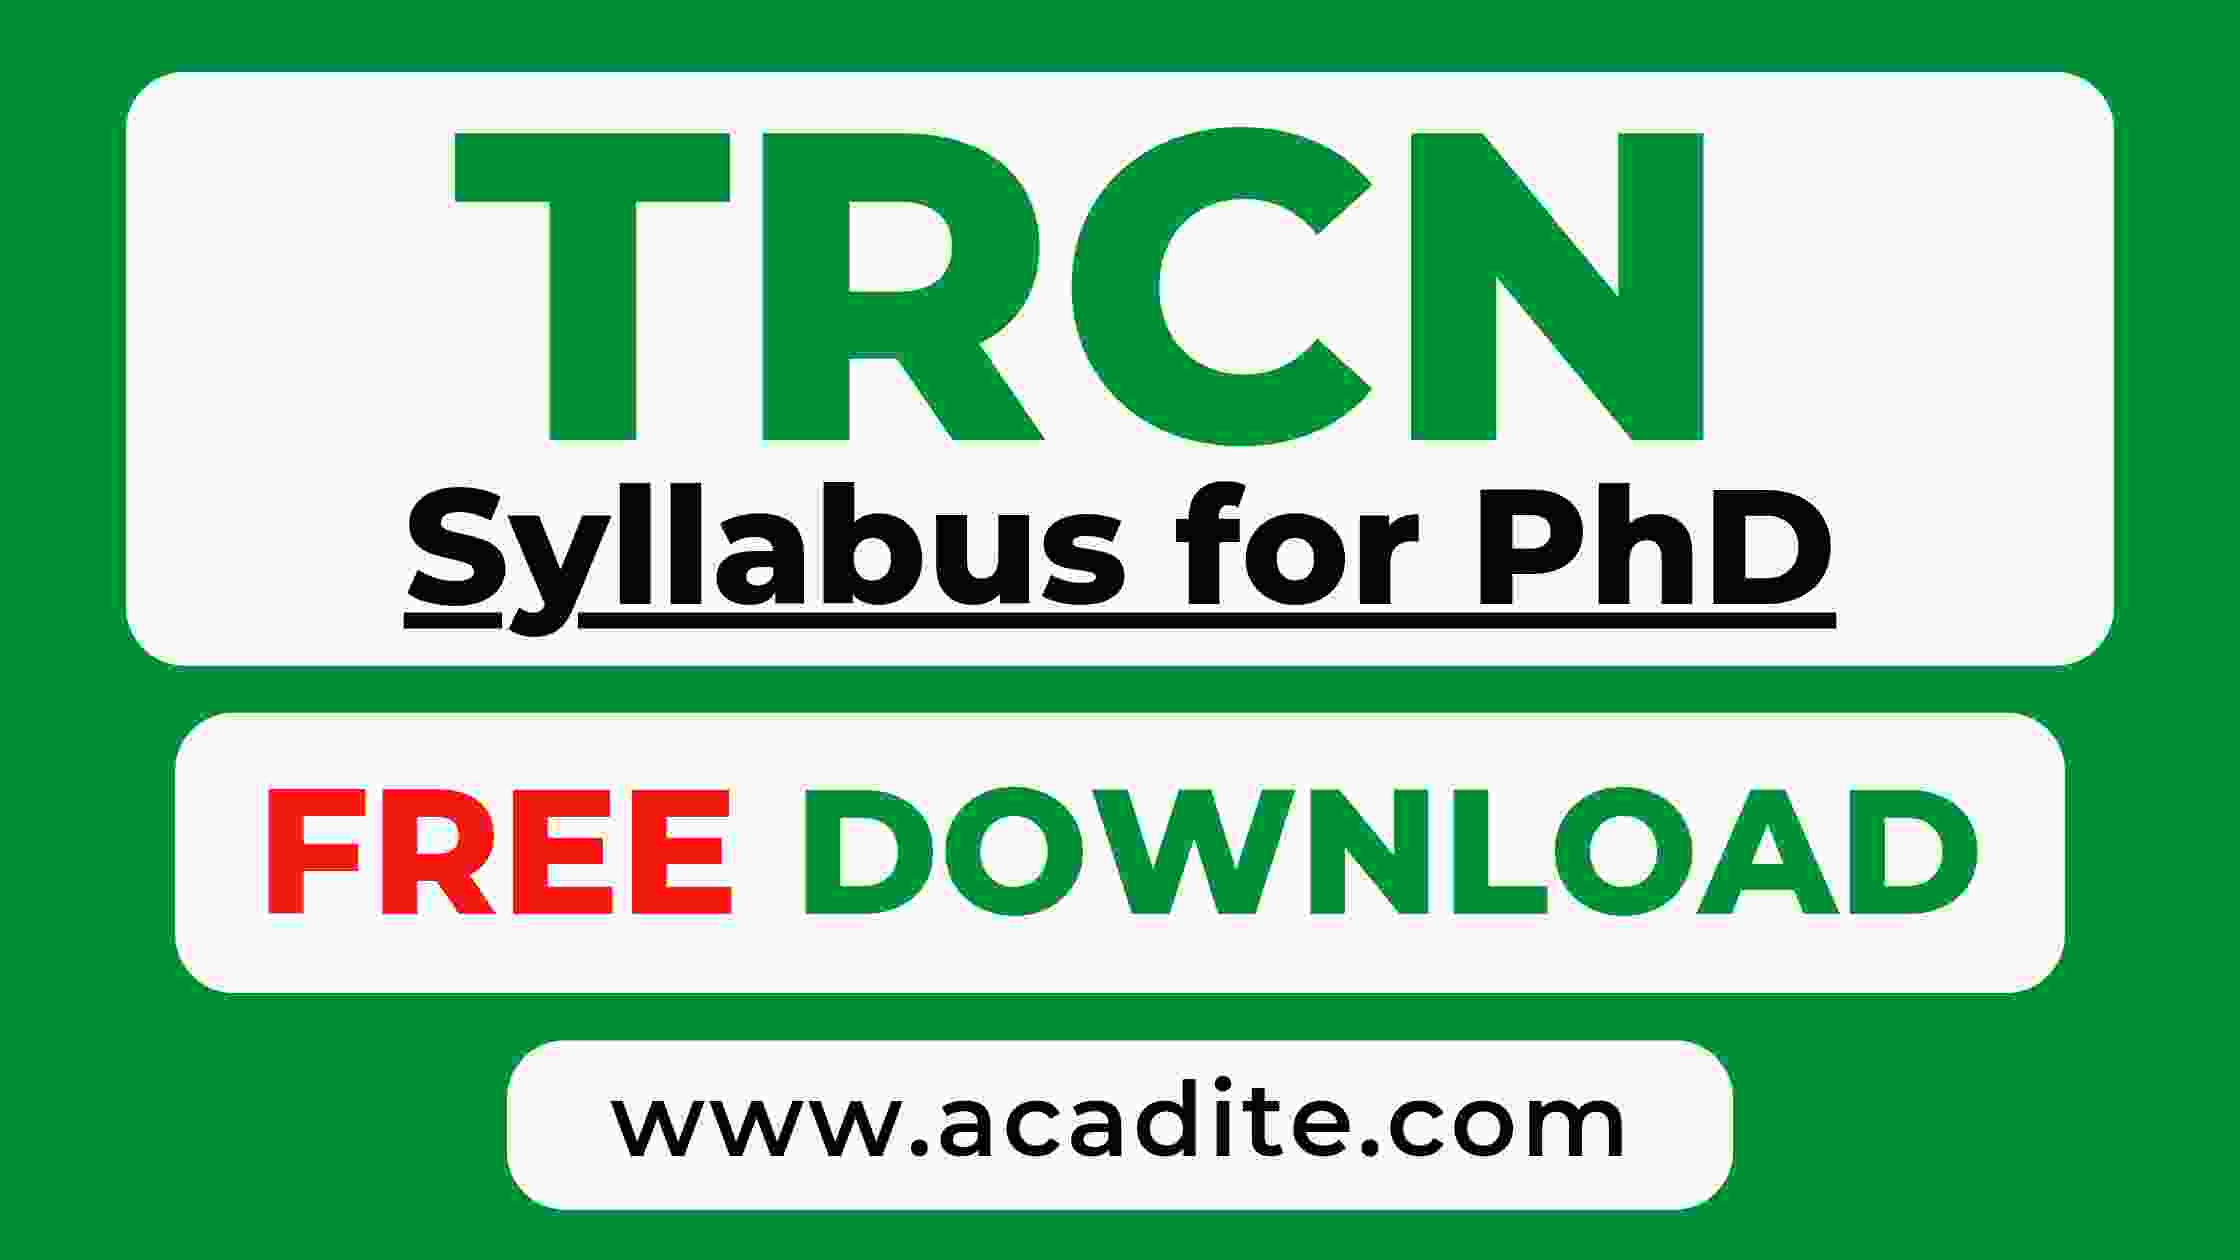 TRCN exam syllabus for PhD holders